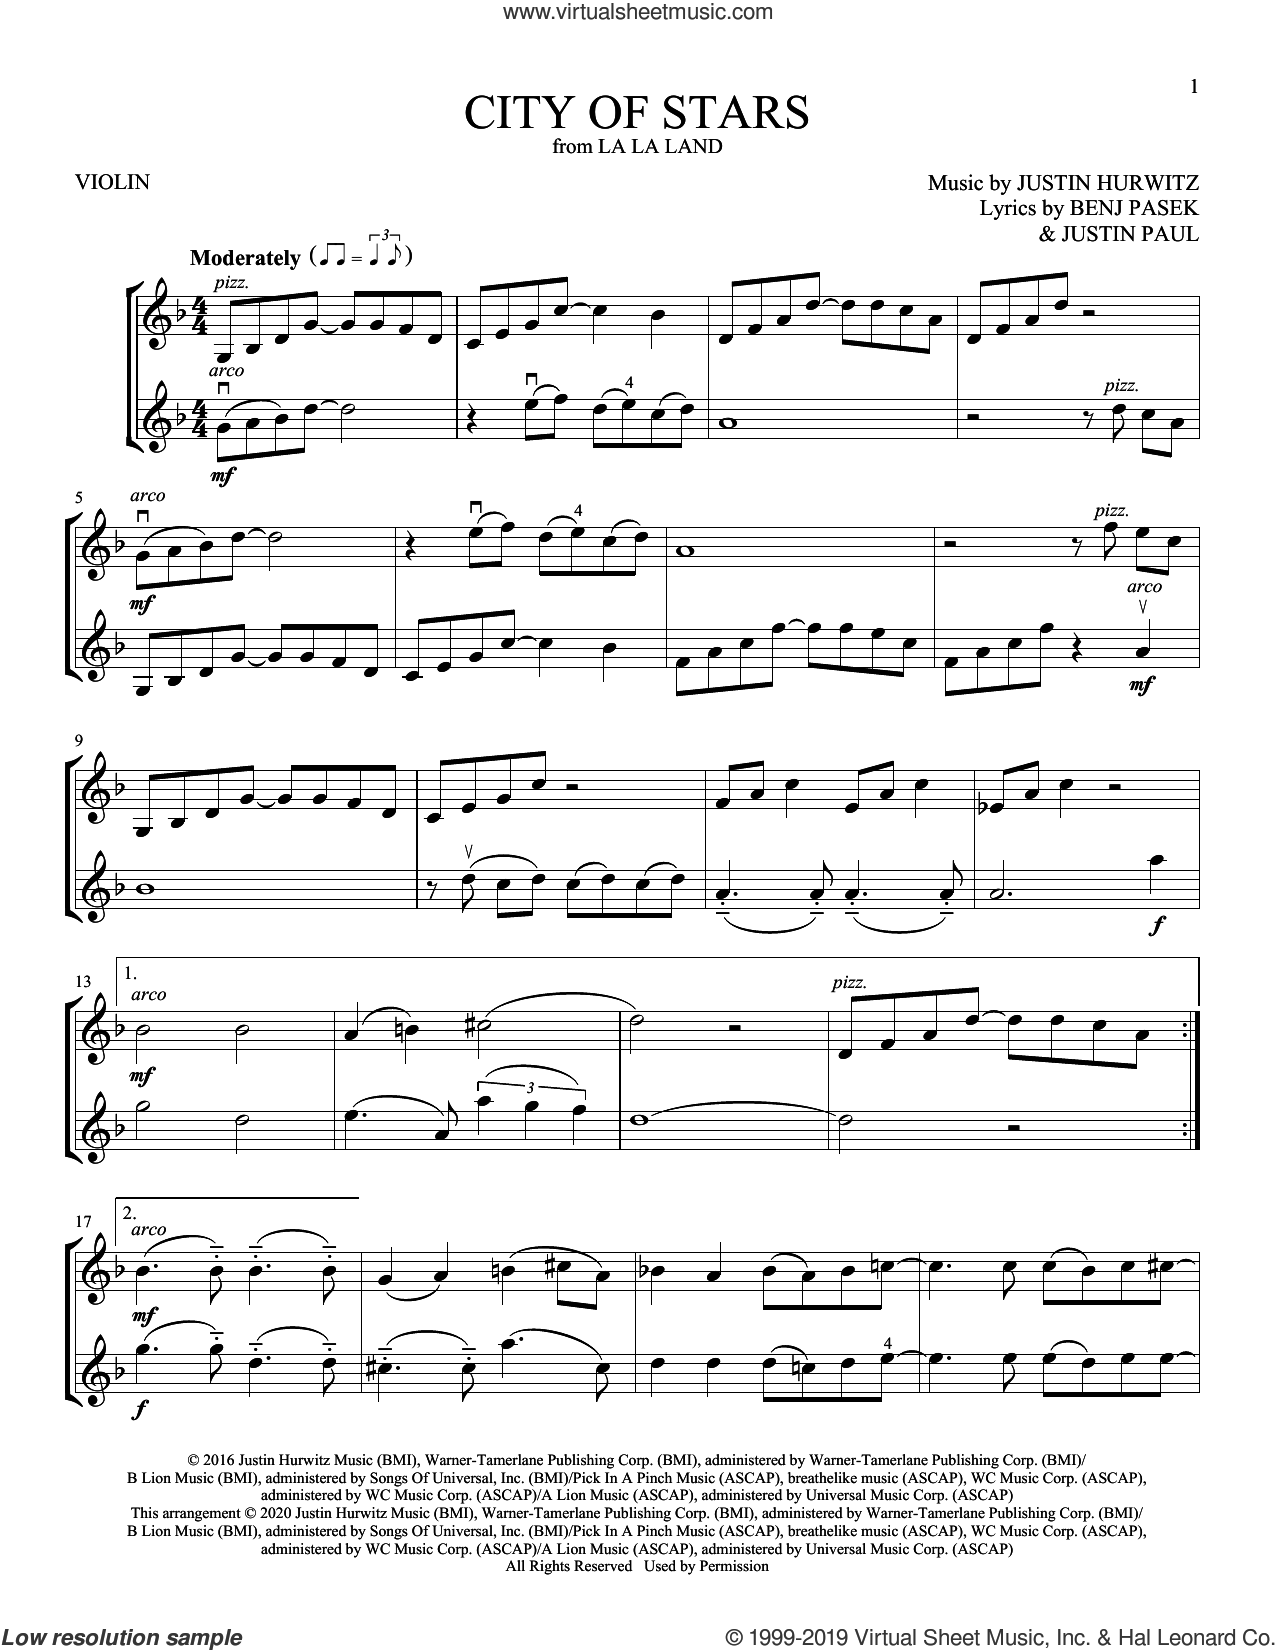 City of Stars by Justin Hurwitz Piano Sheet Music, Advanced Level